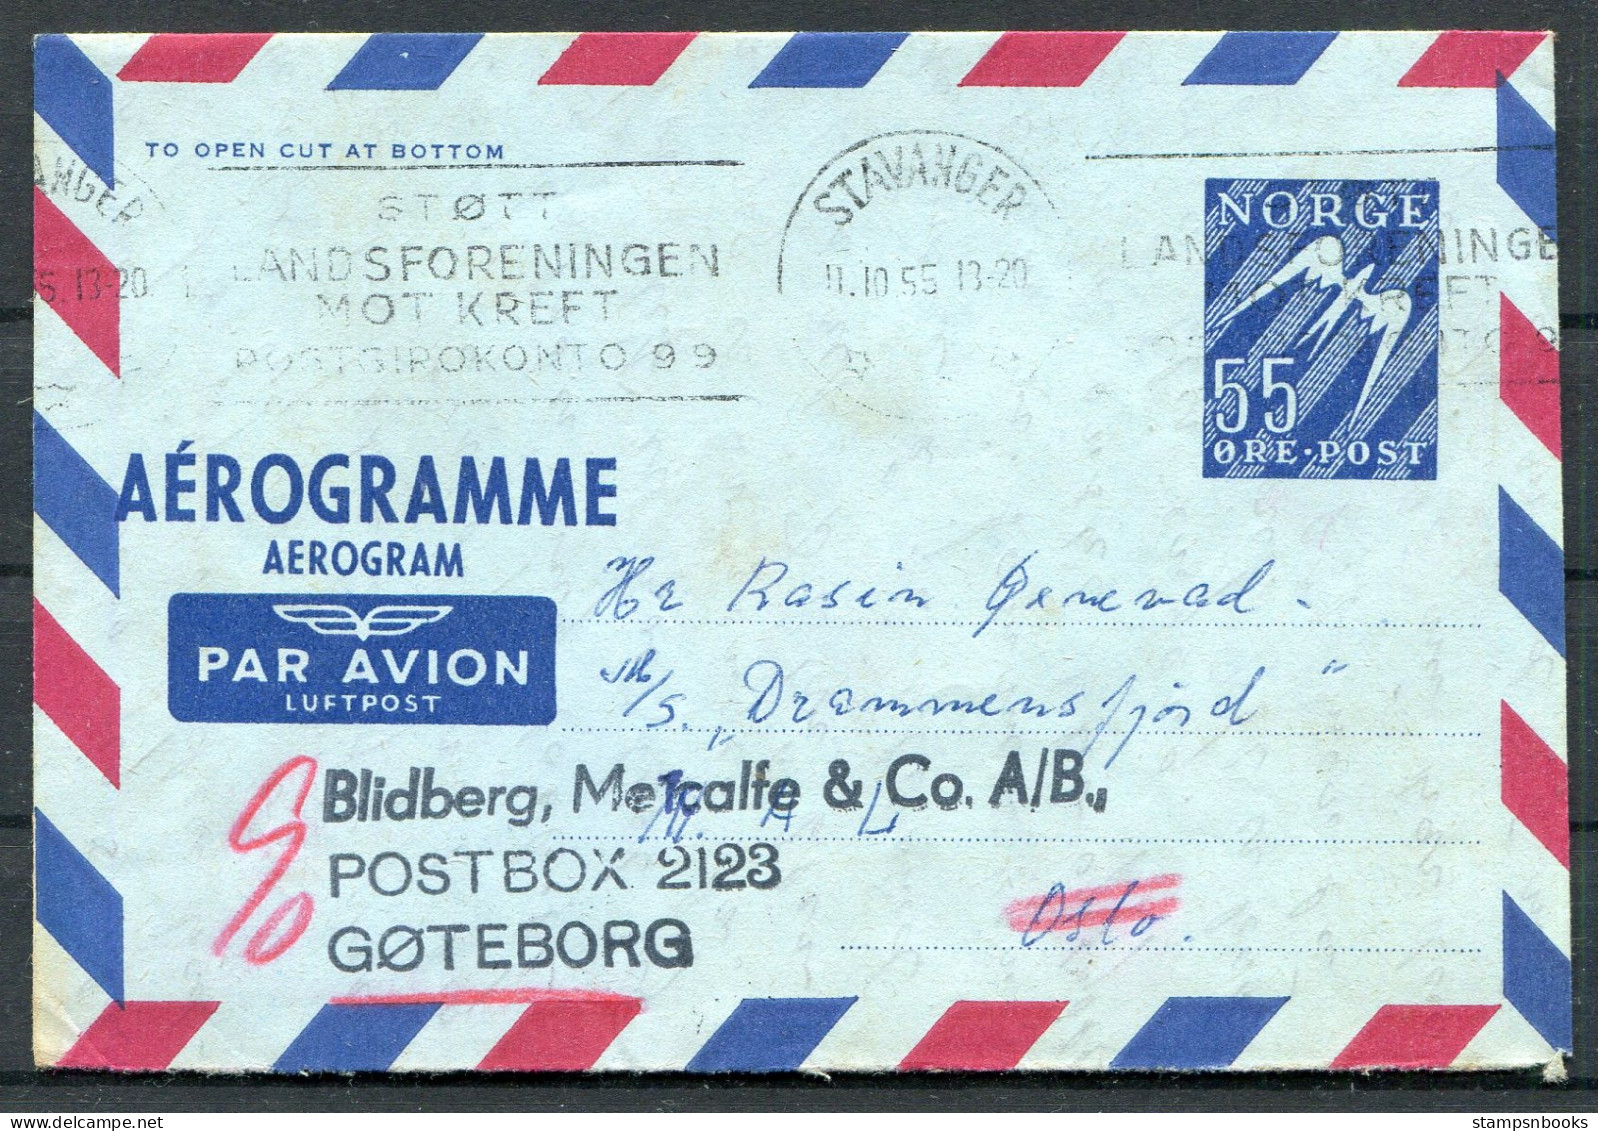 1955 Norway 55ore Aerogramme Aerogram Stavanger - M/S DRAMMENSFJORD Oslo Redirected - Goteborg - Postal Stationery